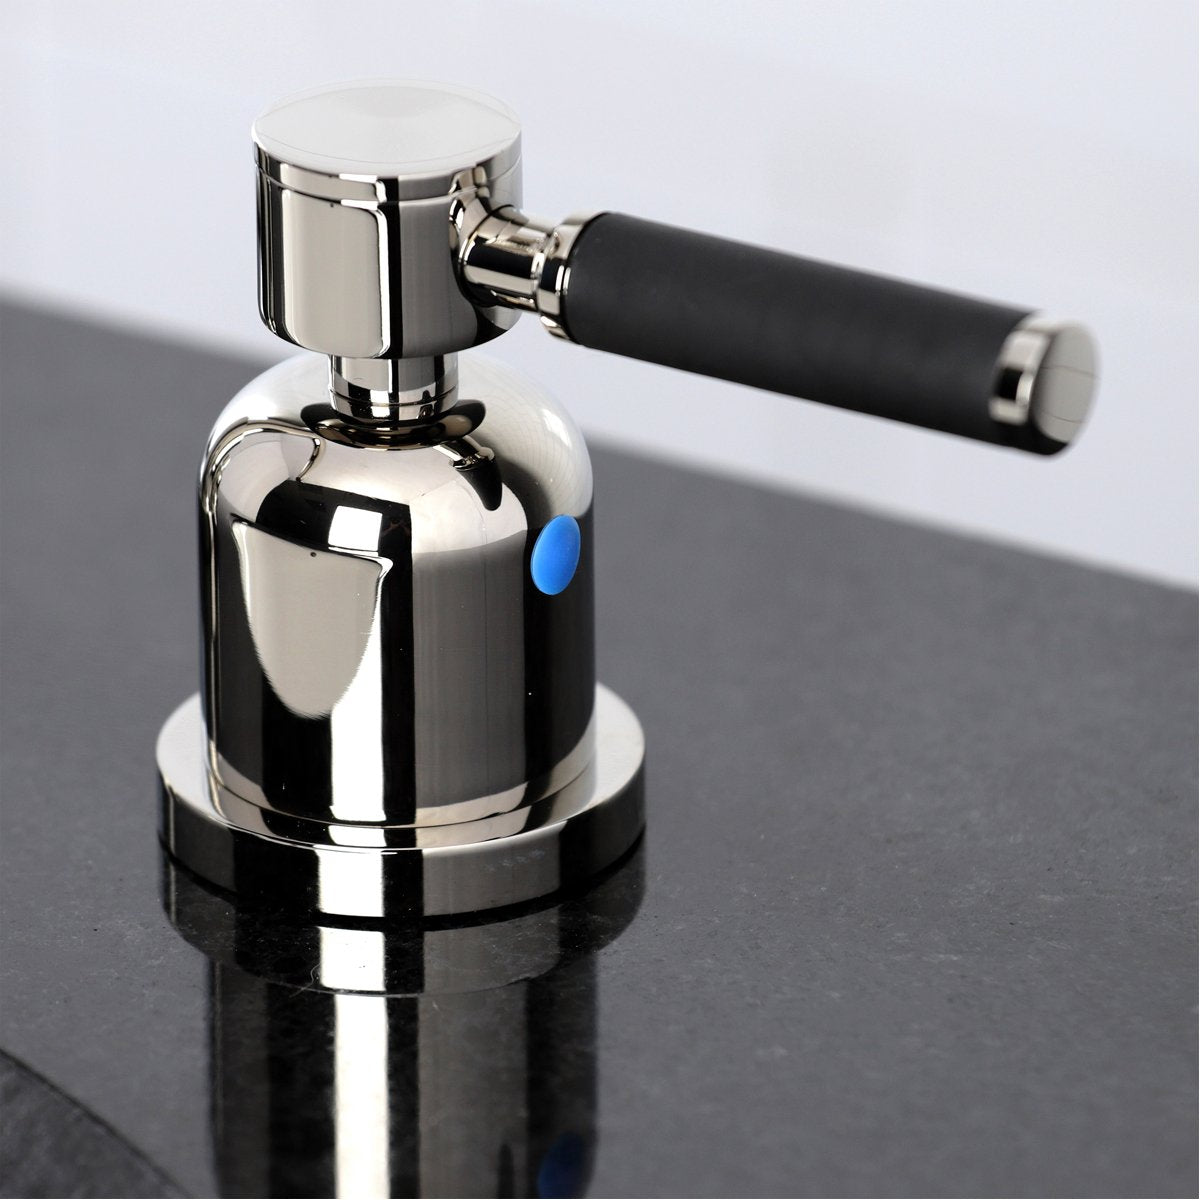 Kingston Brass Fauceture Kaiser 8-Inch Widespread Bathroom Faucet